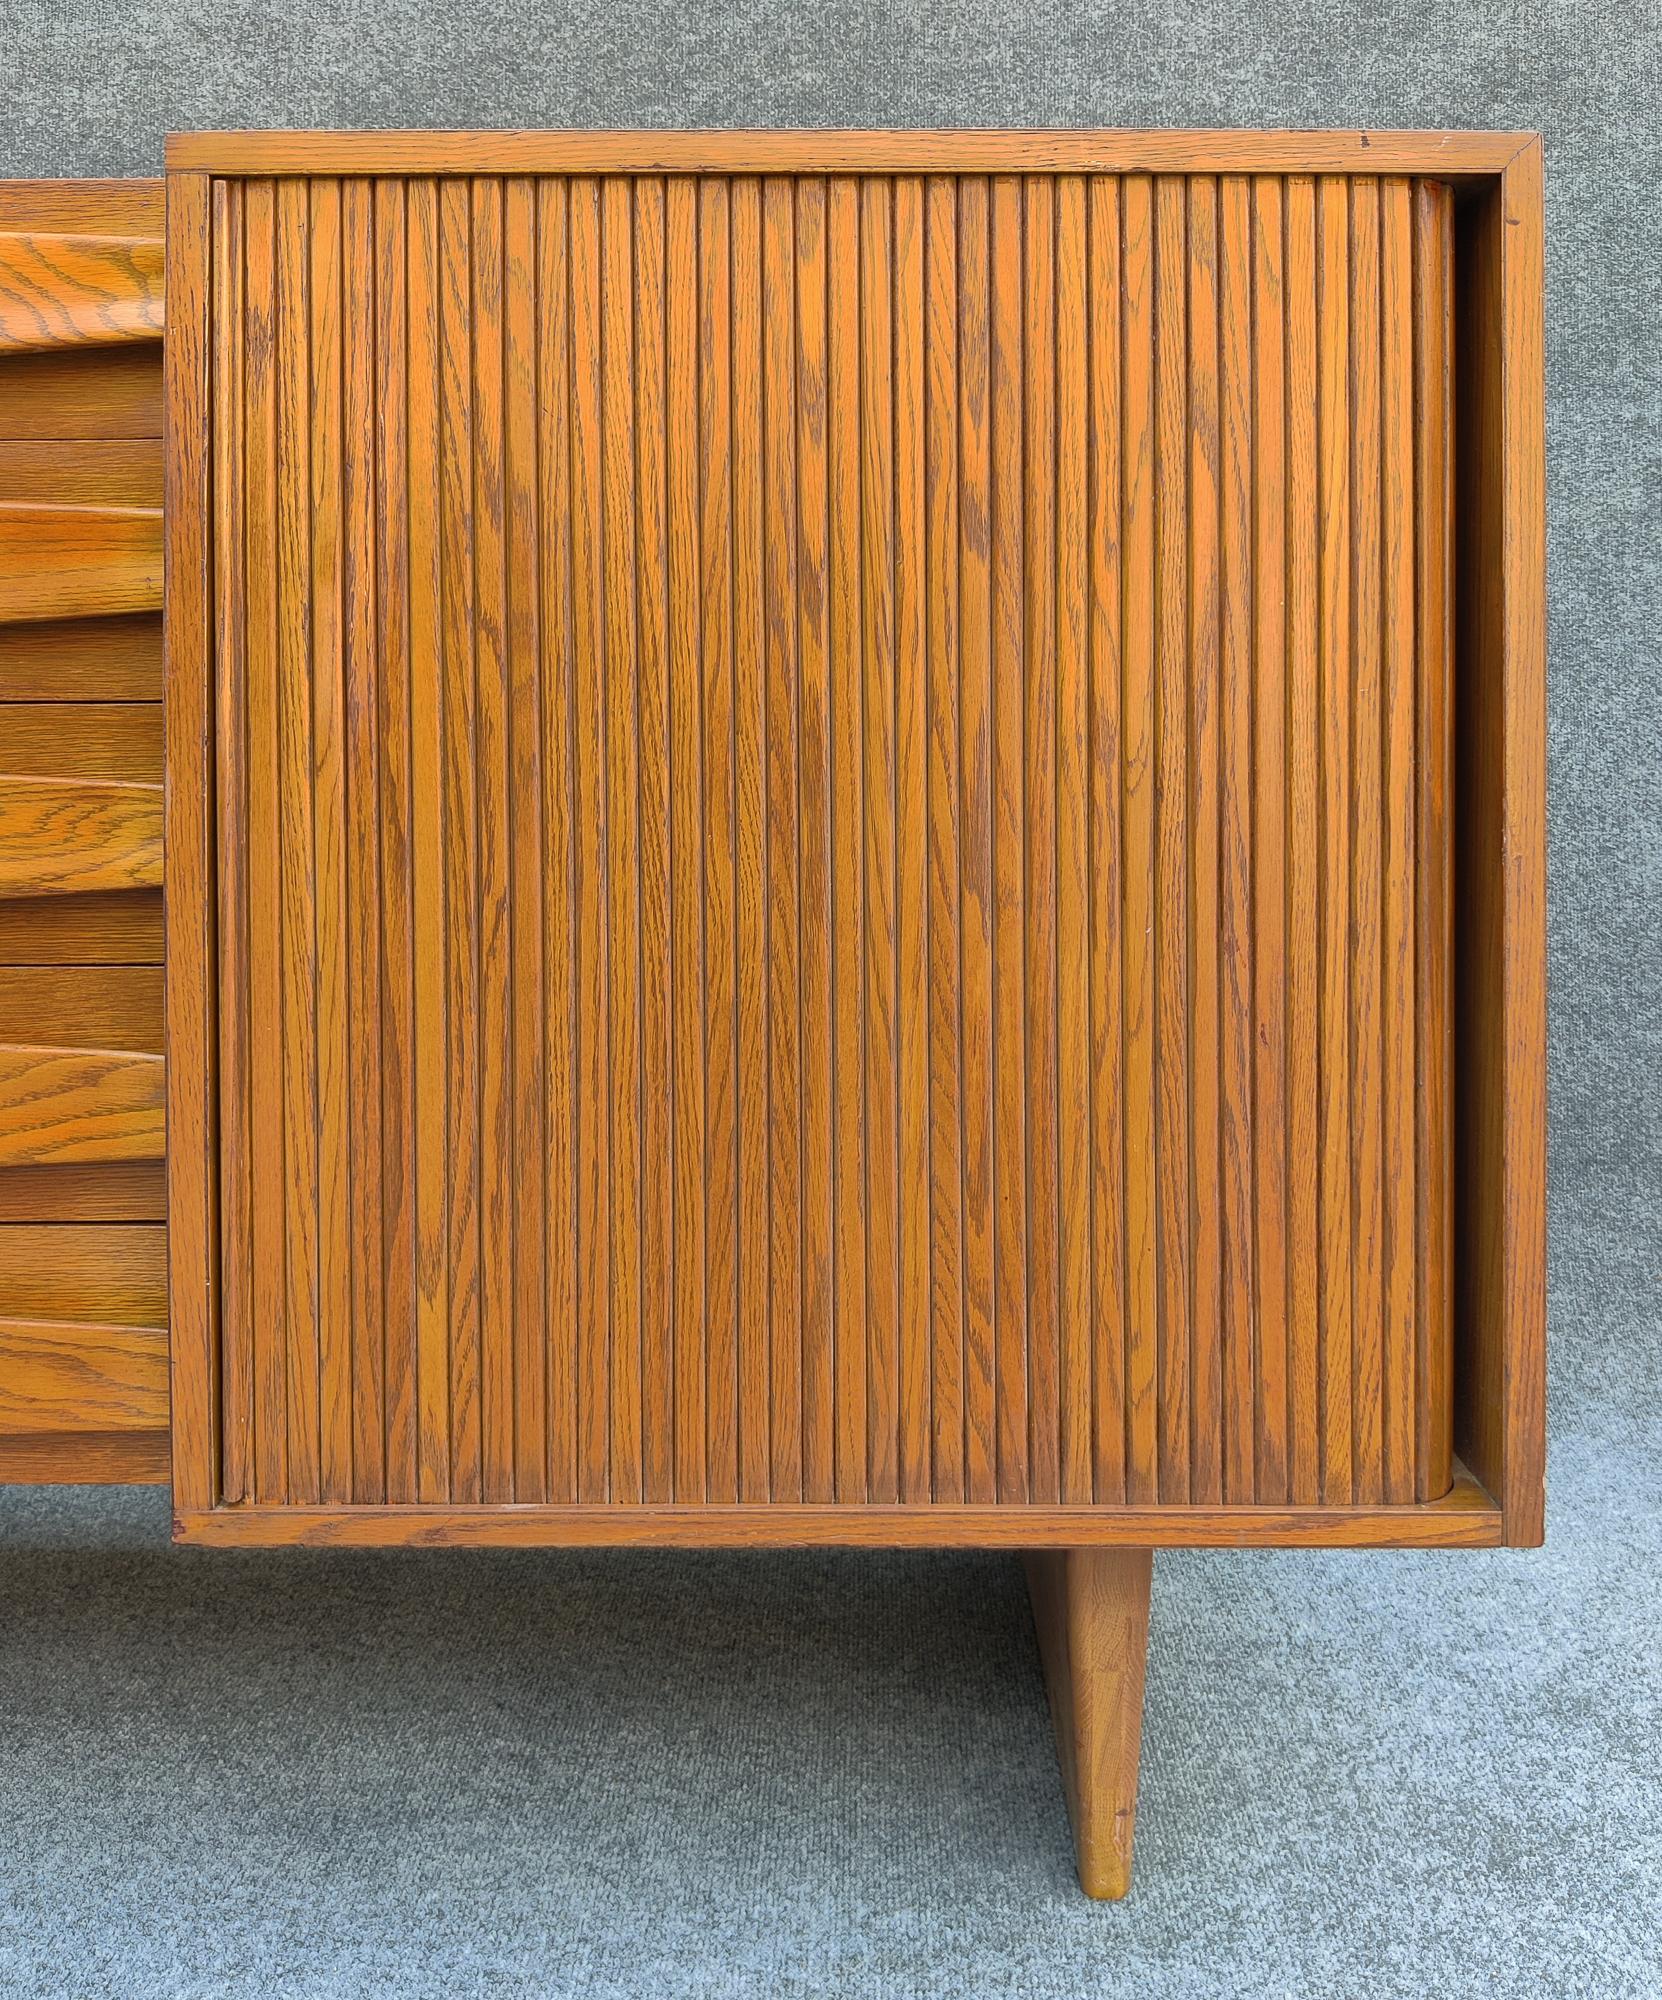 Carved Harold Schwartz Romweber Oak Tambour Cabinet, Sculptural & Architectural 1950s